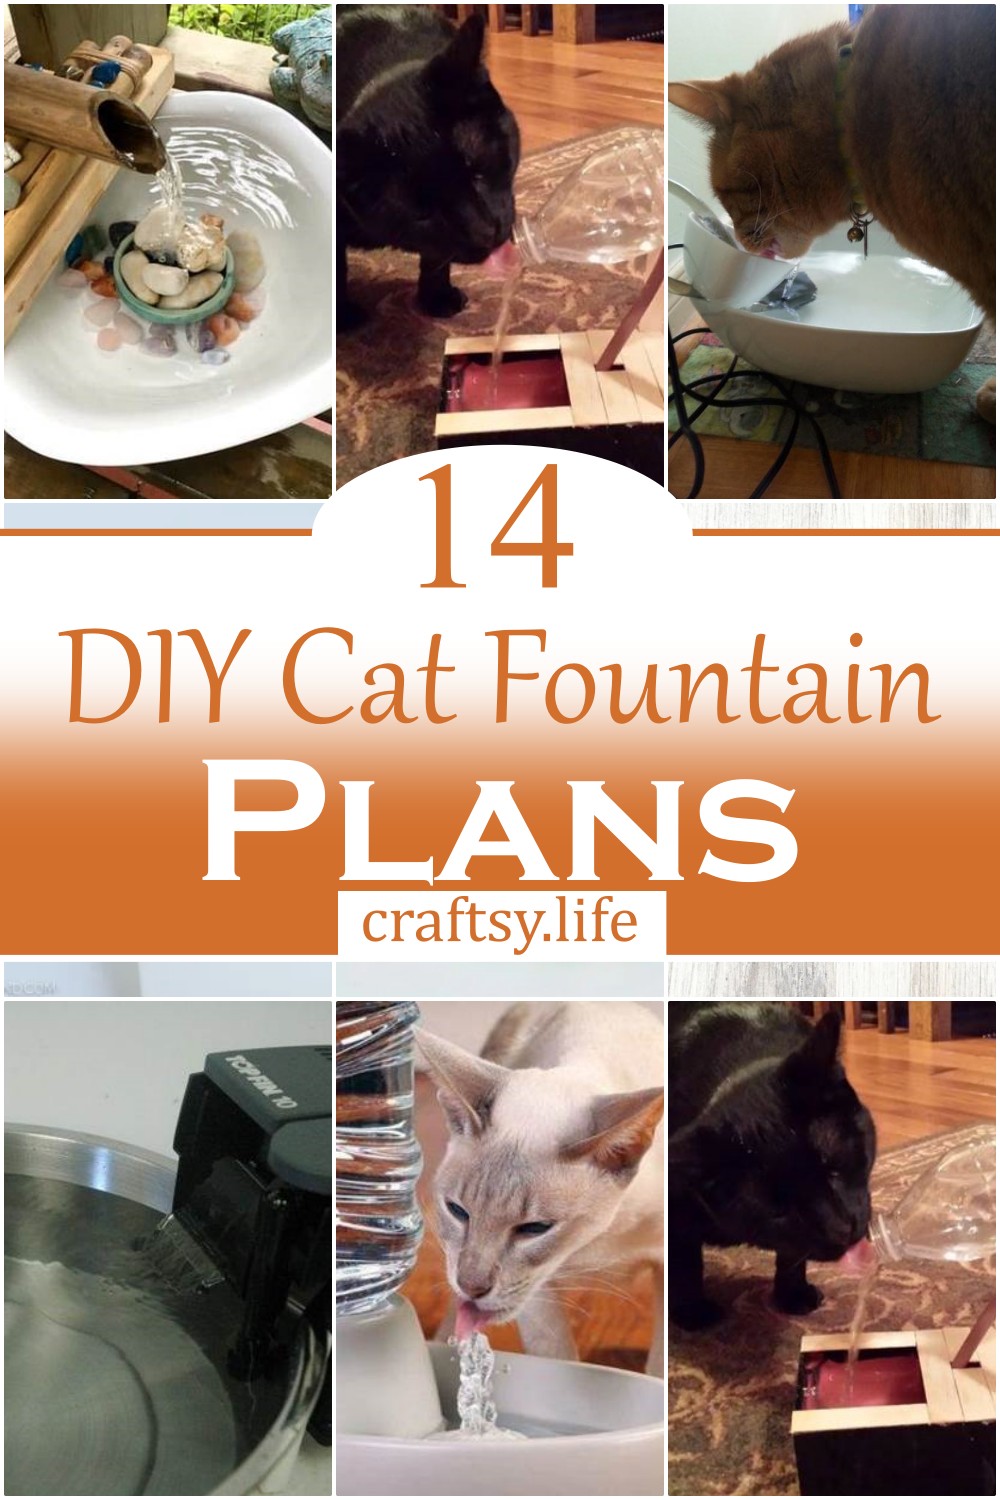 DIY Cat Fountain Plans